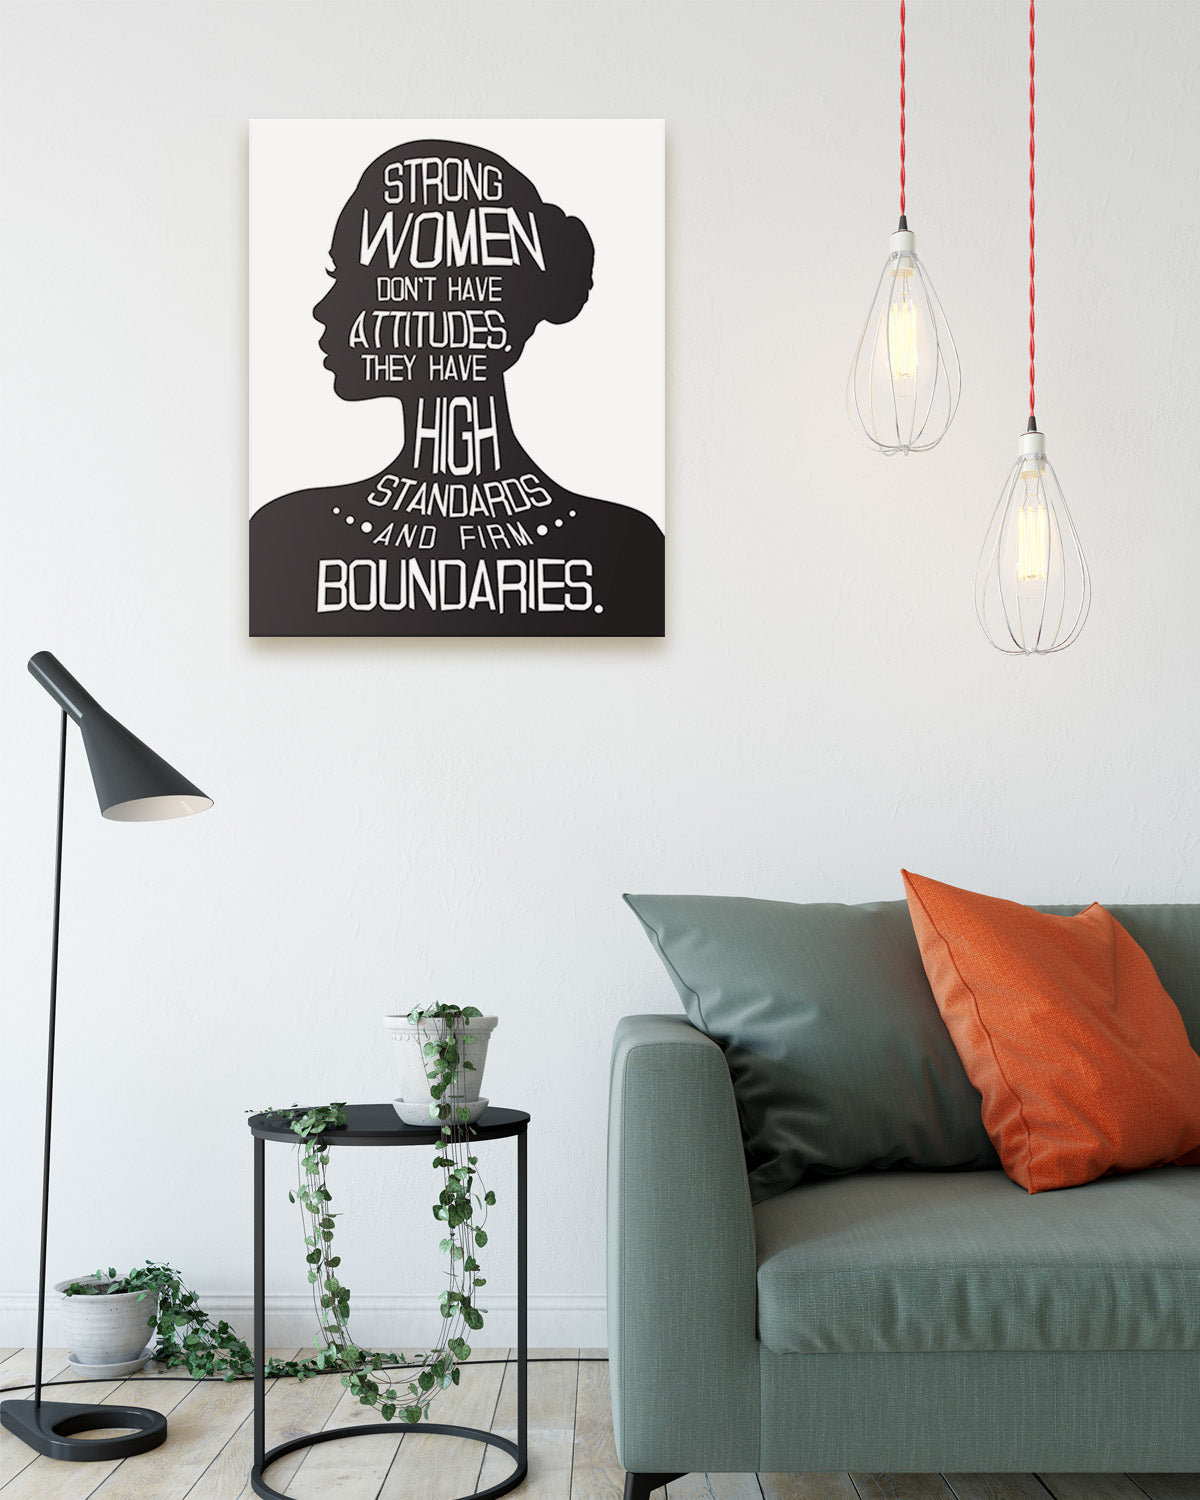 Motivational Gifts for Women, Teens, Girls - Inspirational Quotes for Females - Feminism Wall Art - Women Empowerment Wall Decor - Bedroom wall decor for women